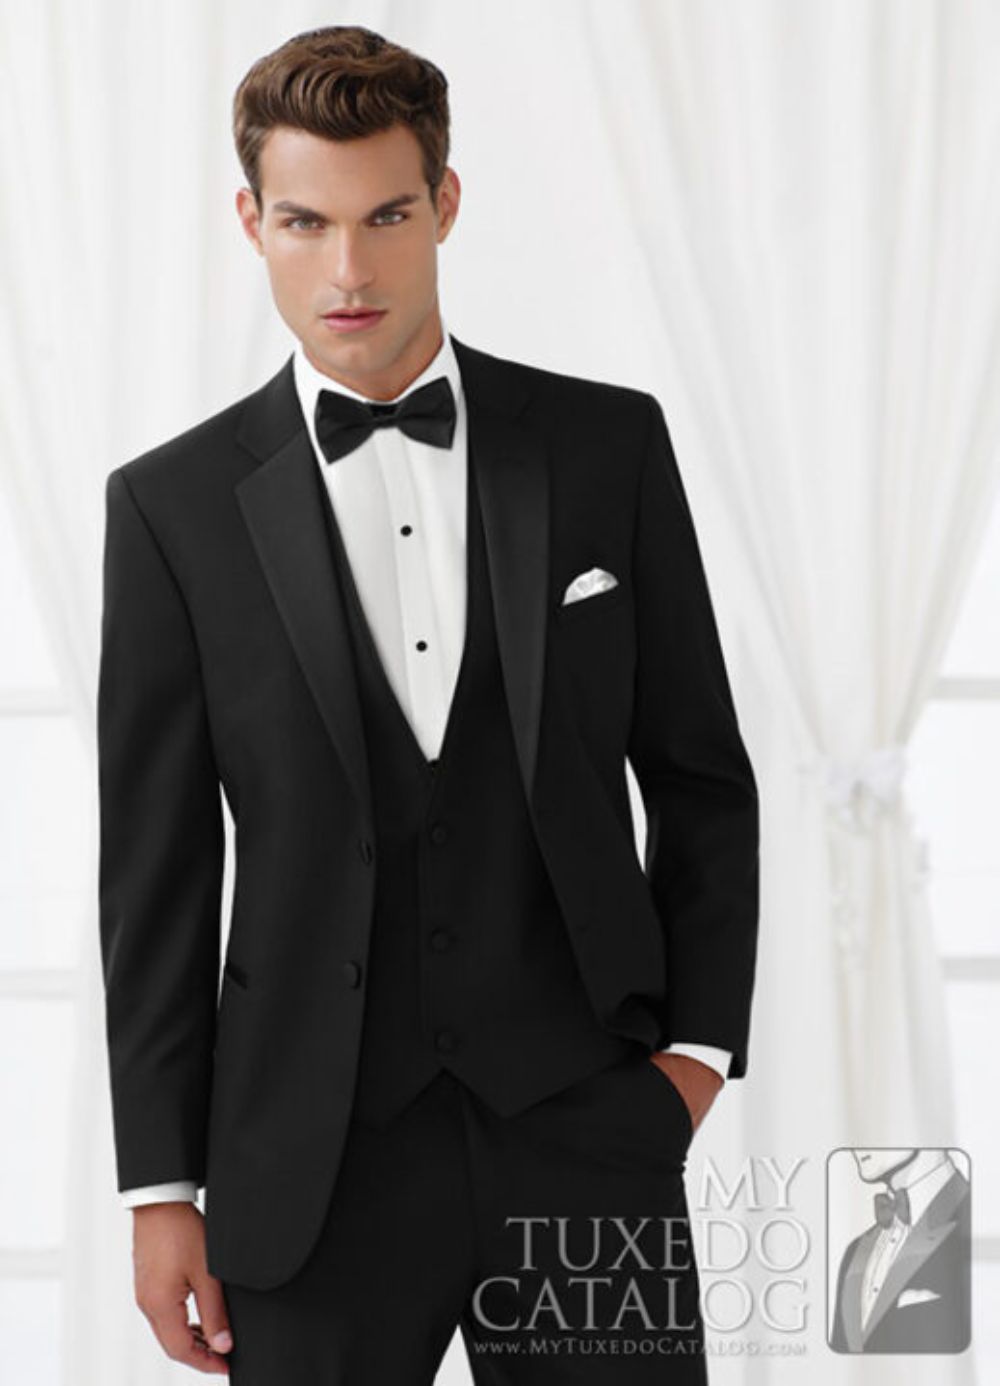 Tuxedos - Dunhill Tuxedos / Suits